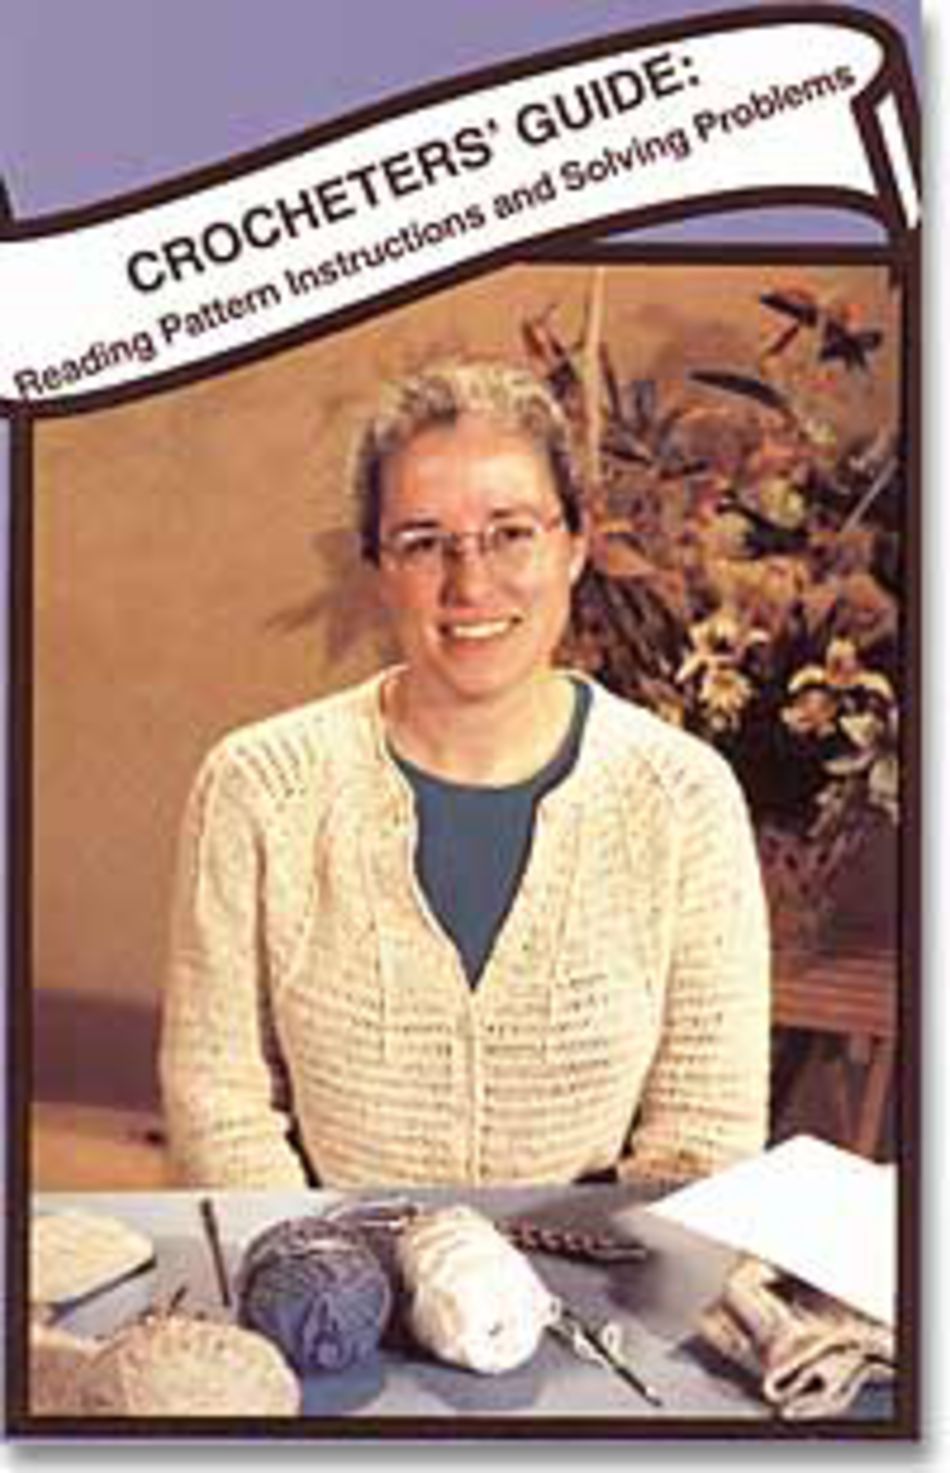 Crochet CDDVD DVD  Crocheteraposs Guide